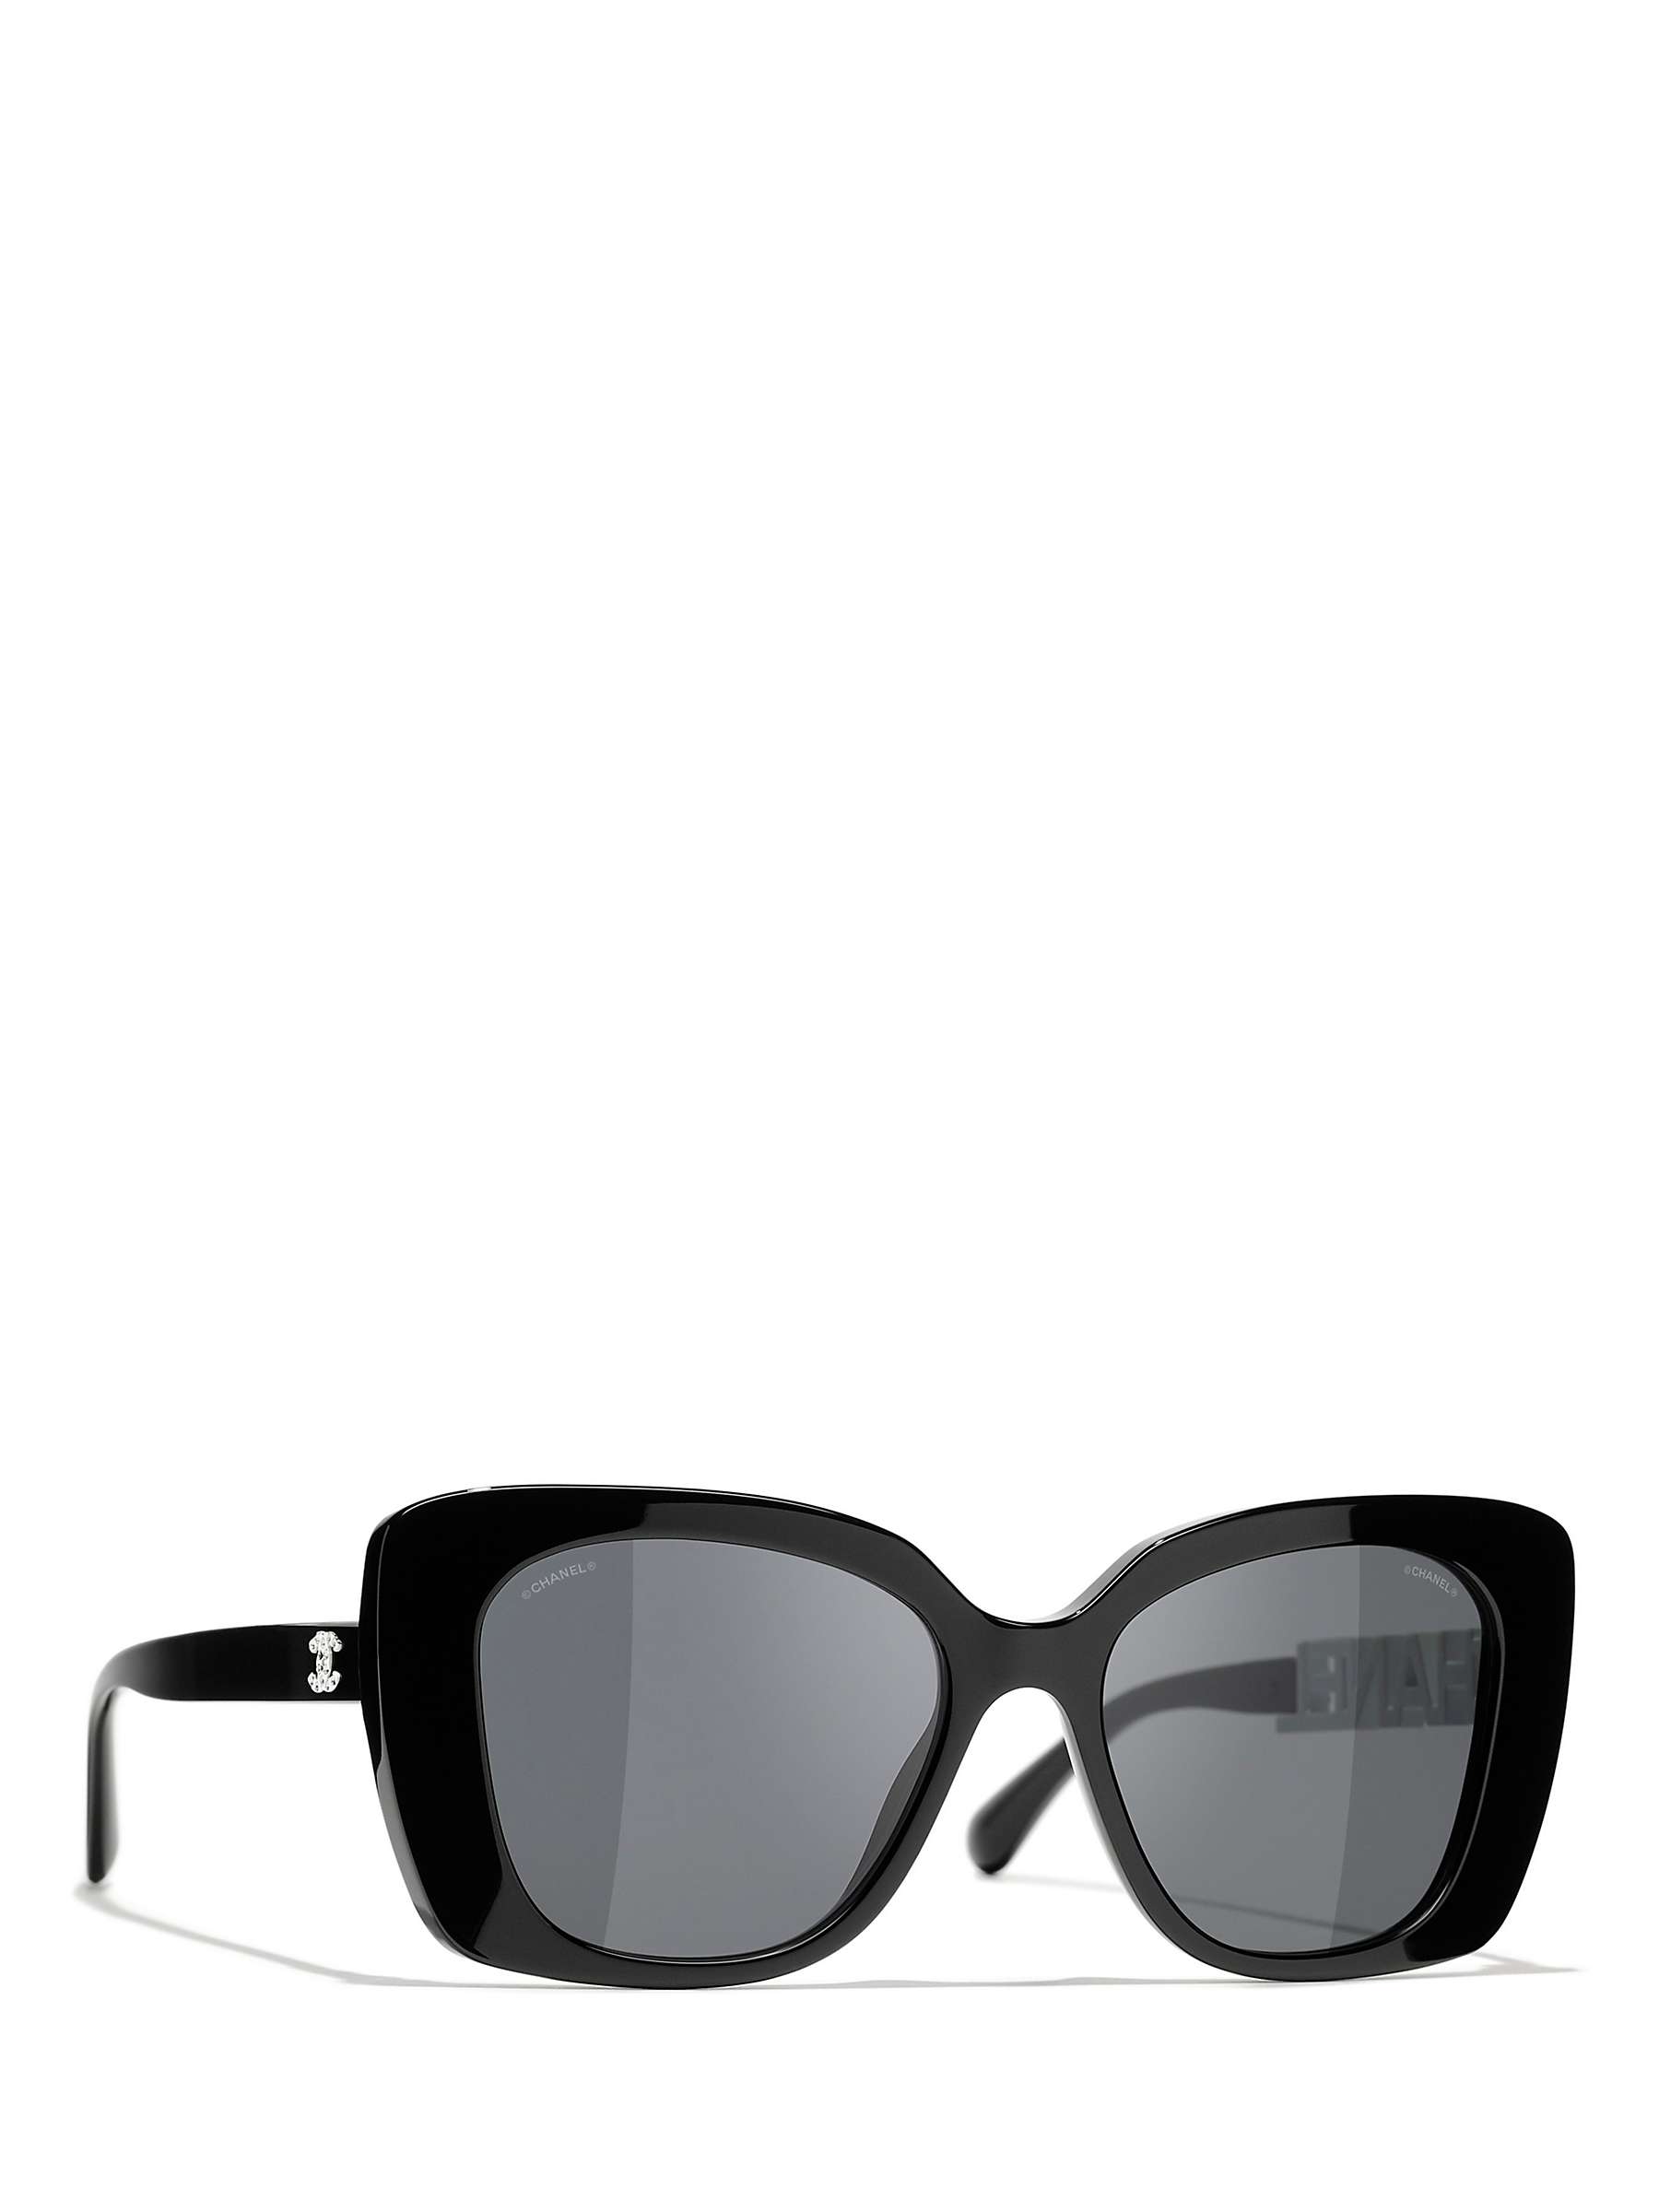 Buy CHANEL Pillow Sunglasses CH5422B Black/Grey Online at johnlewis.com